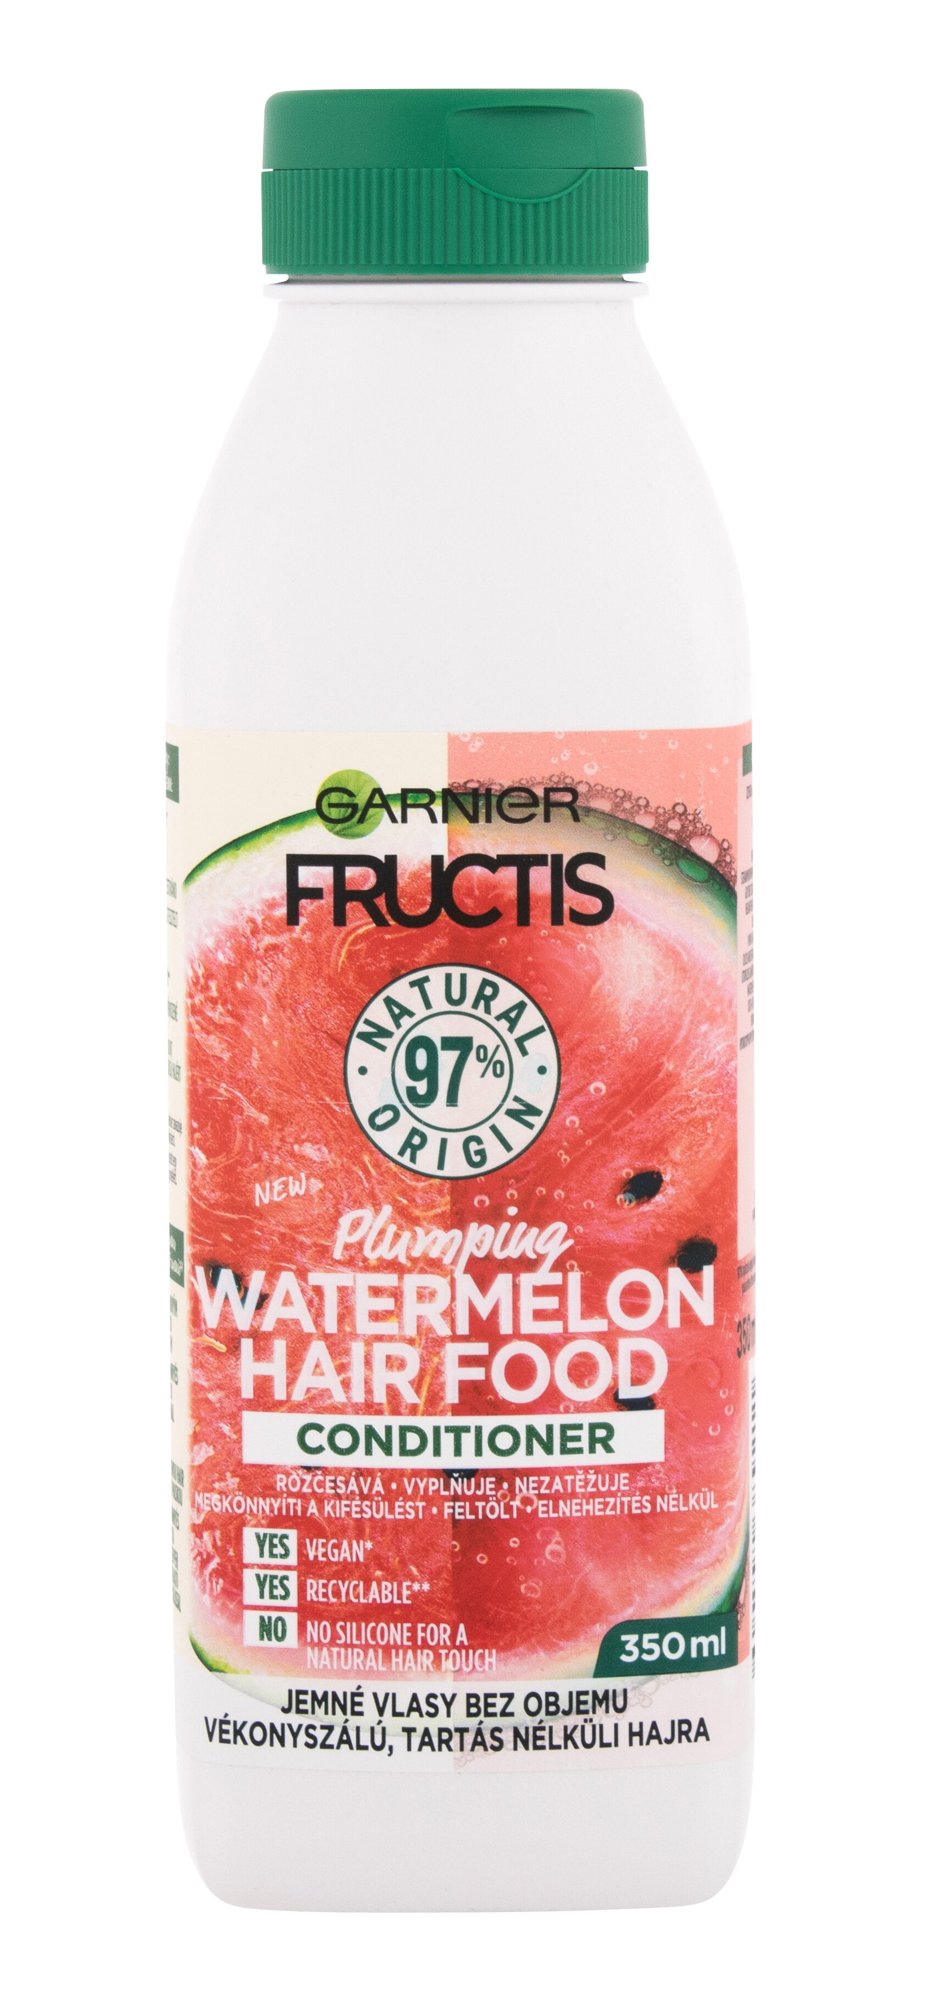 Garnier Fructis Hair Food Watermelon kondicionierius